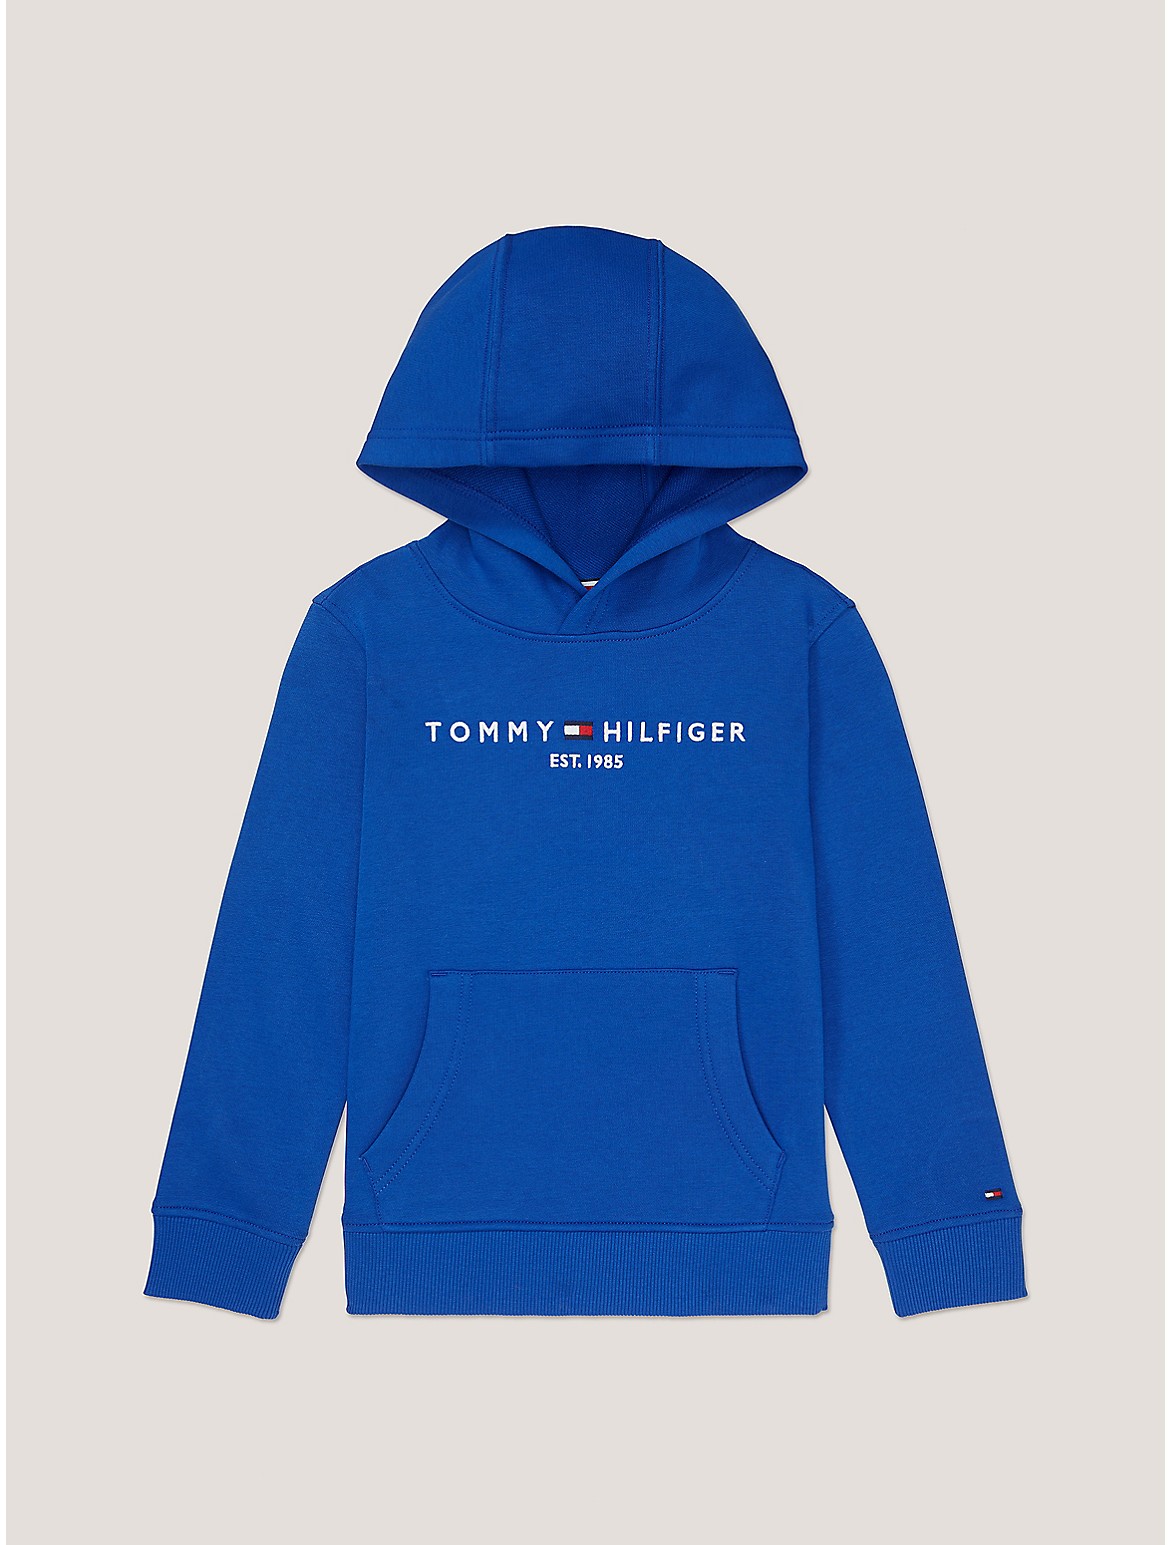 Tommy Hilfiger Kids' Tommy Logo Hoodie